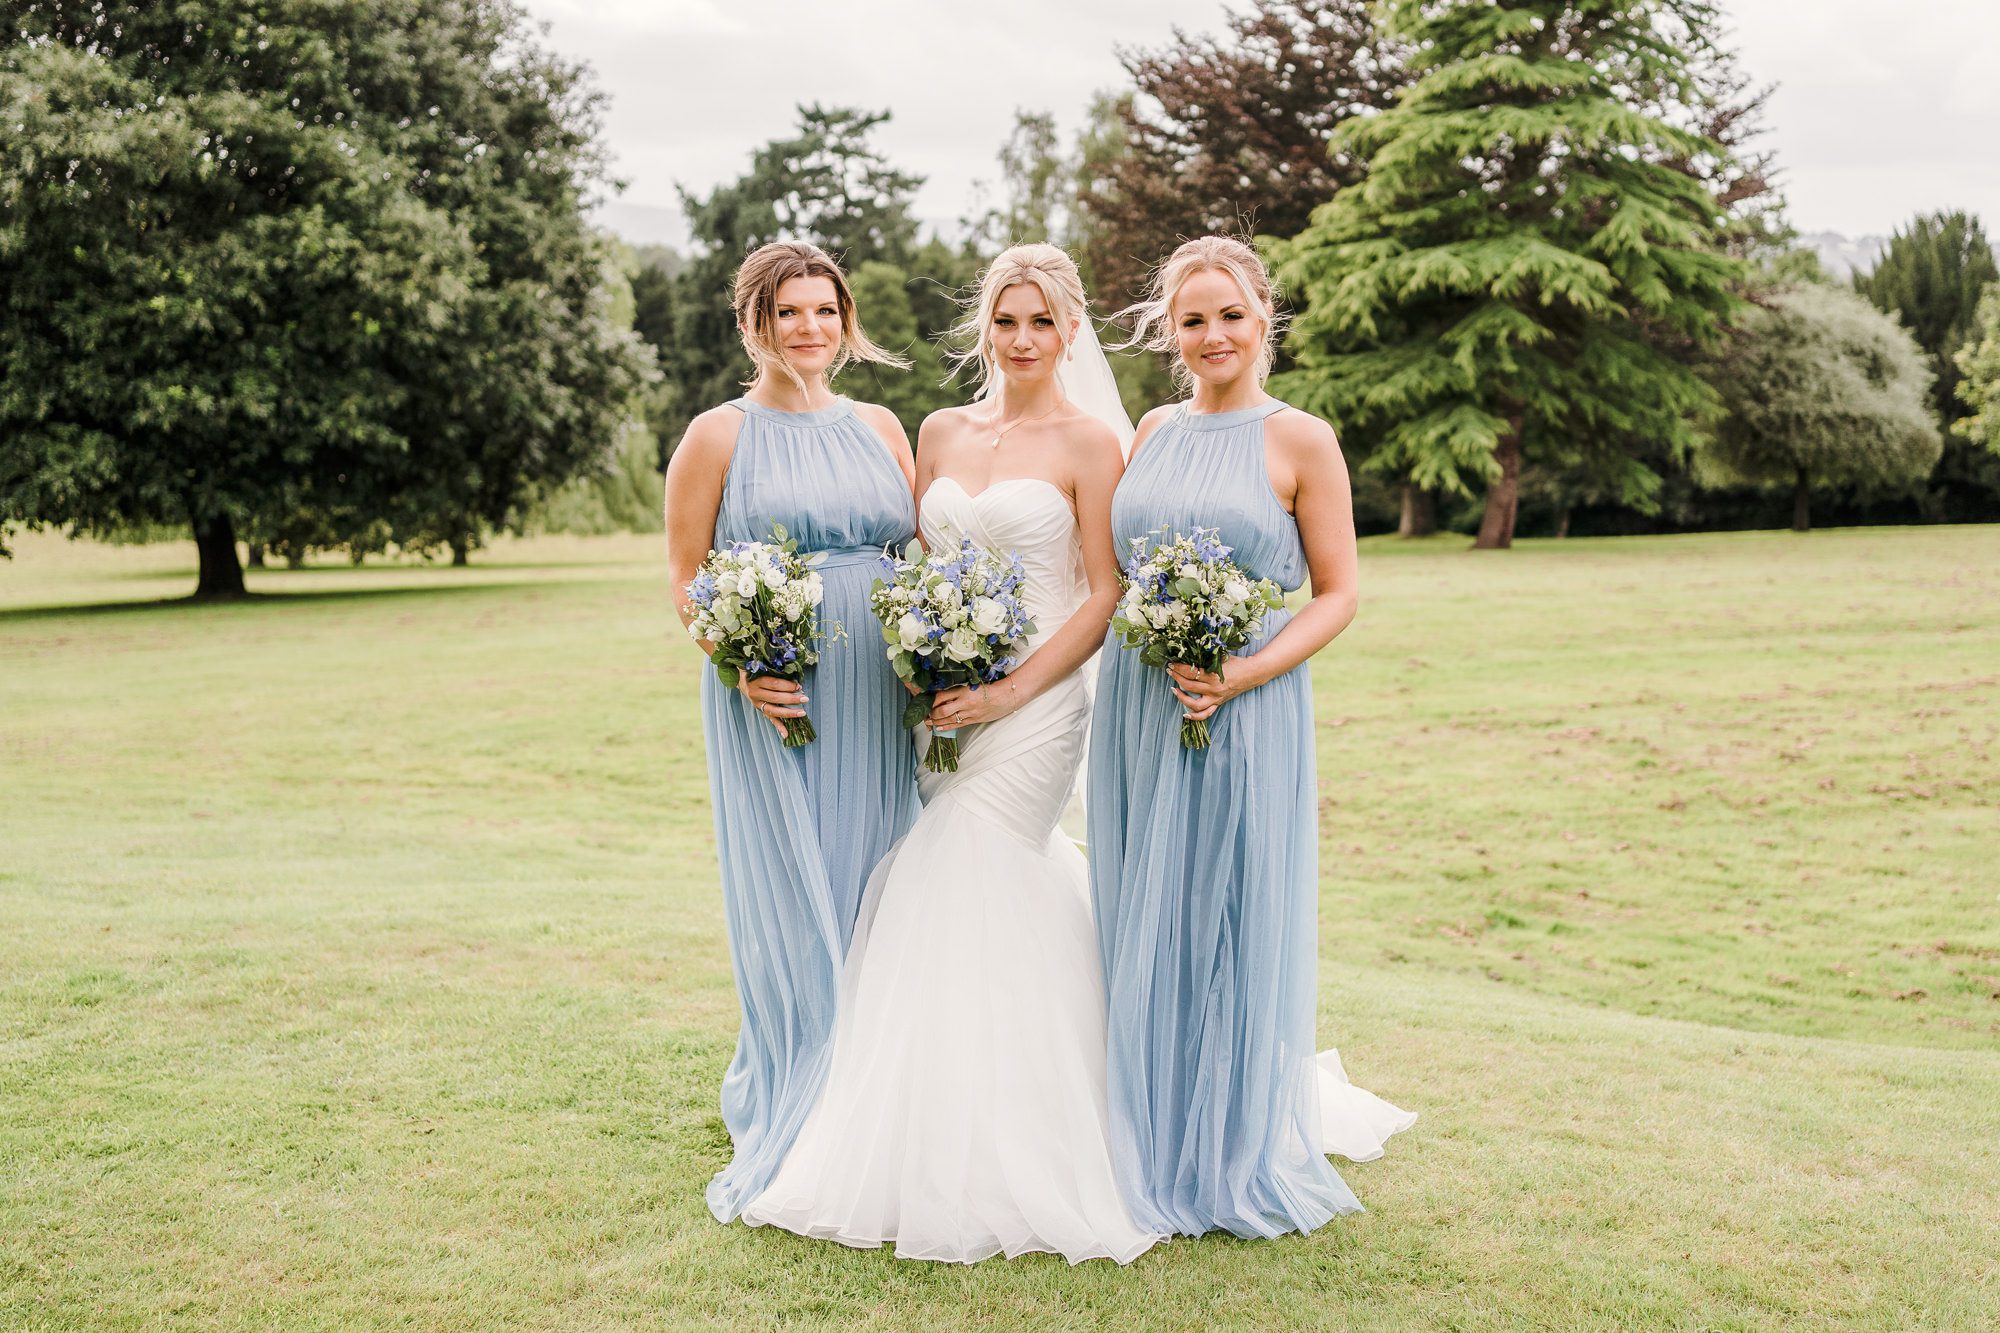 Blue Bridesmaids dresses